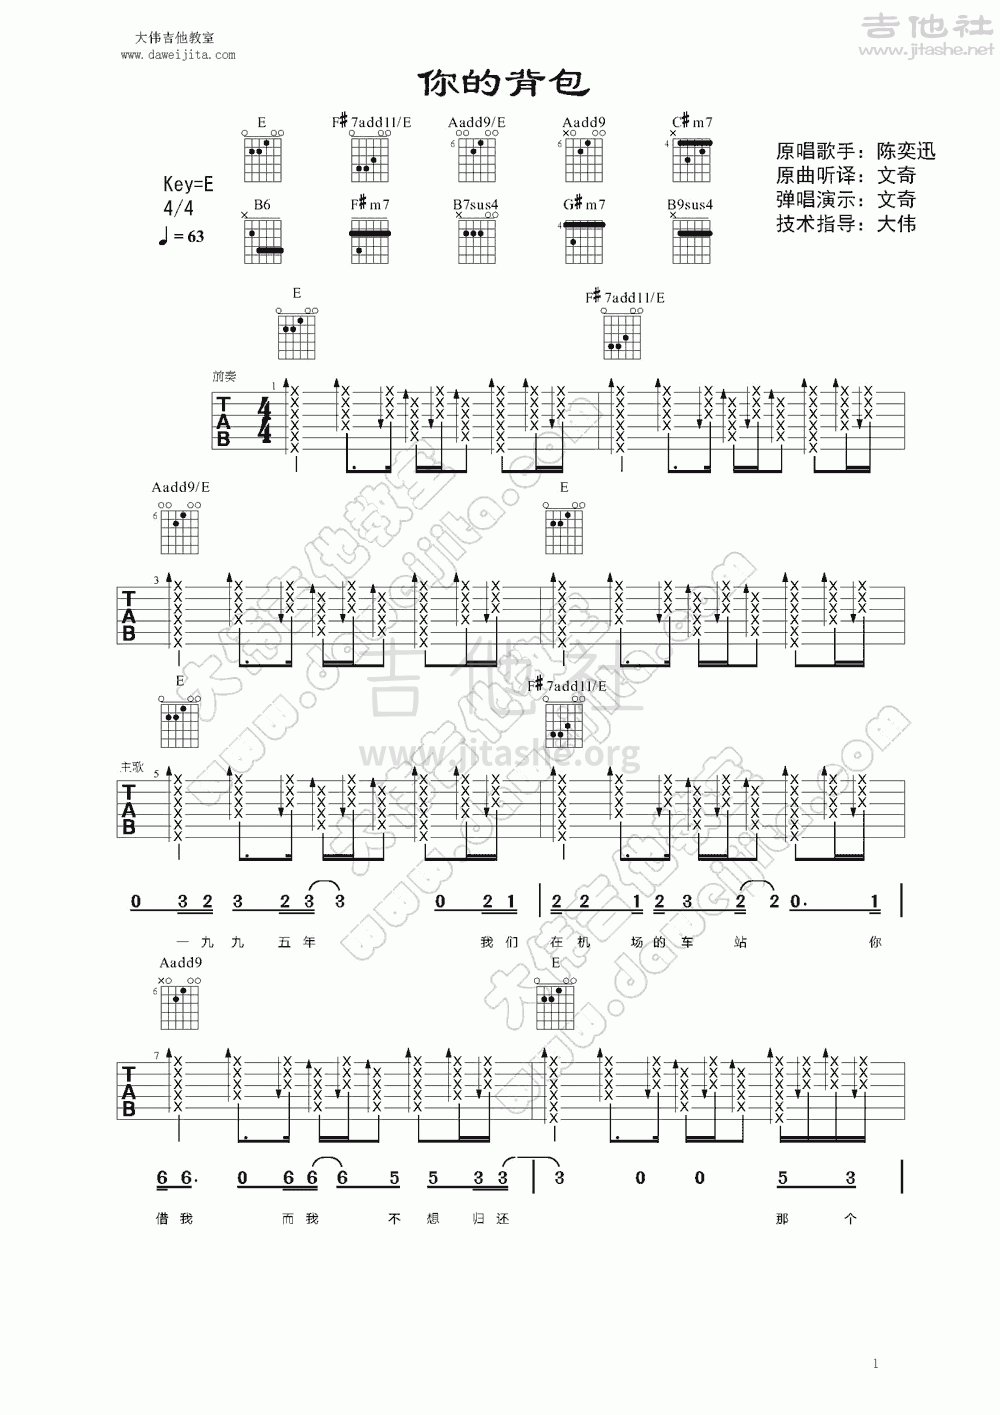 打印:你的背包吉他谱_陈奕迅(Eason Chan)_www.daweijita.com_你的背包_1.gif